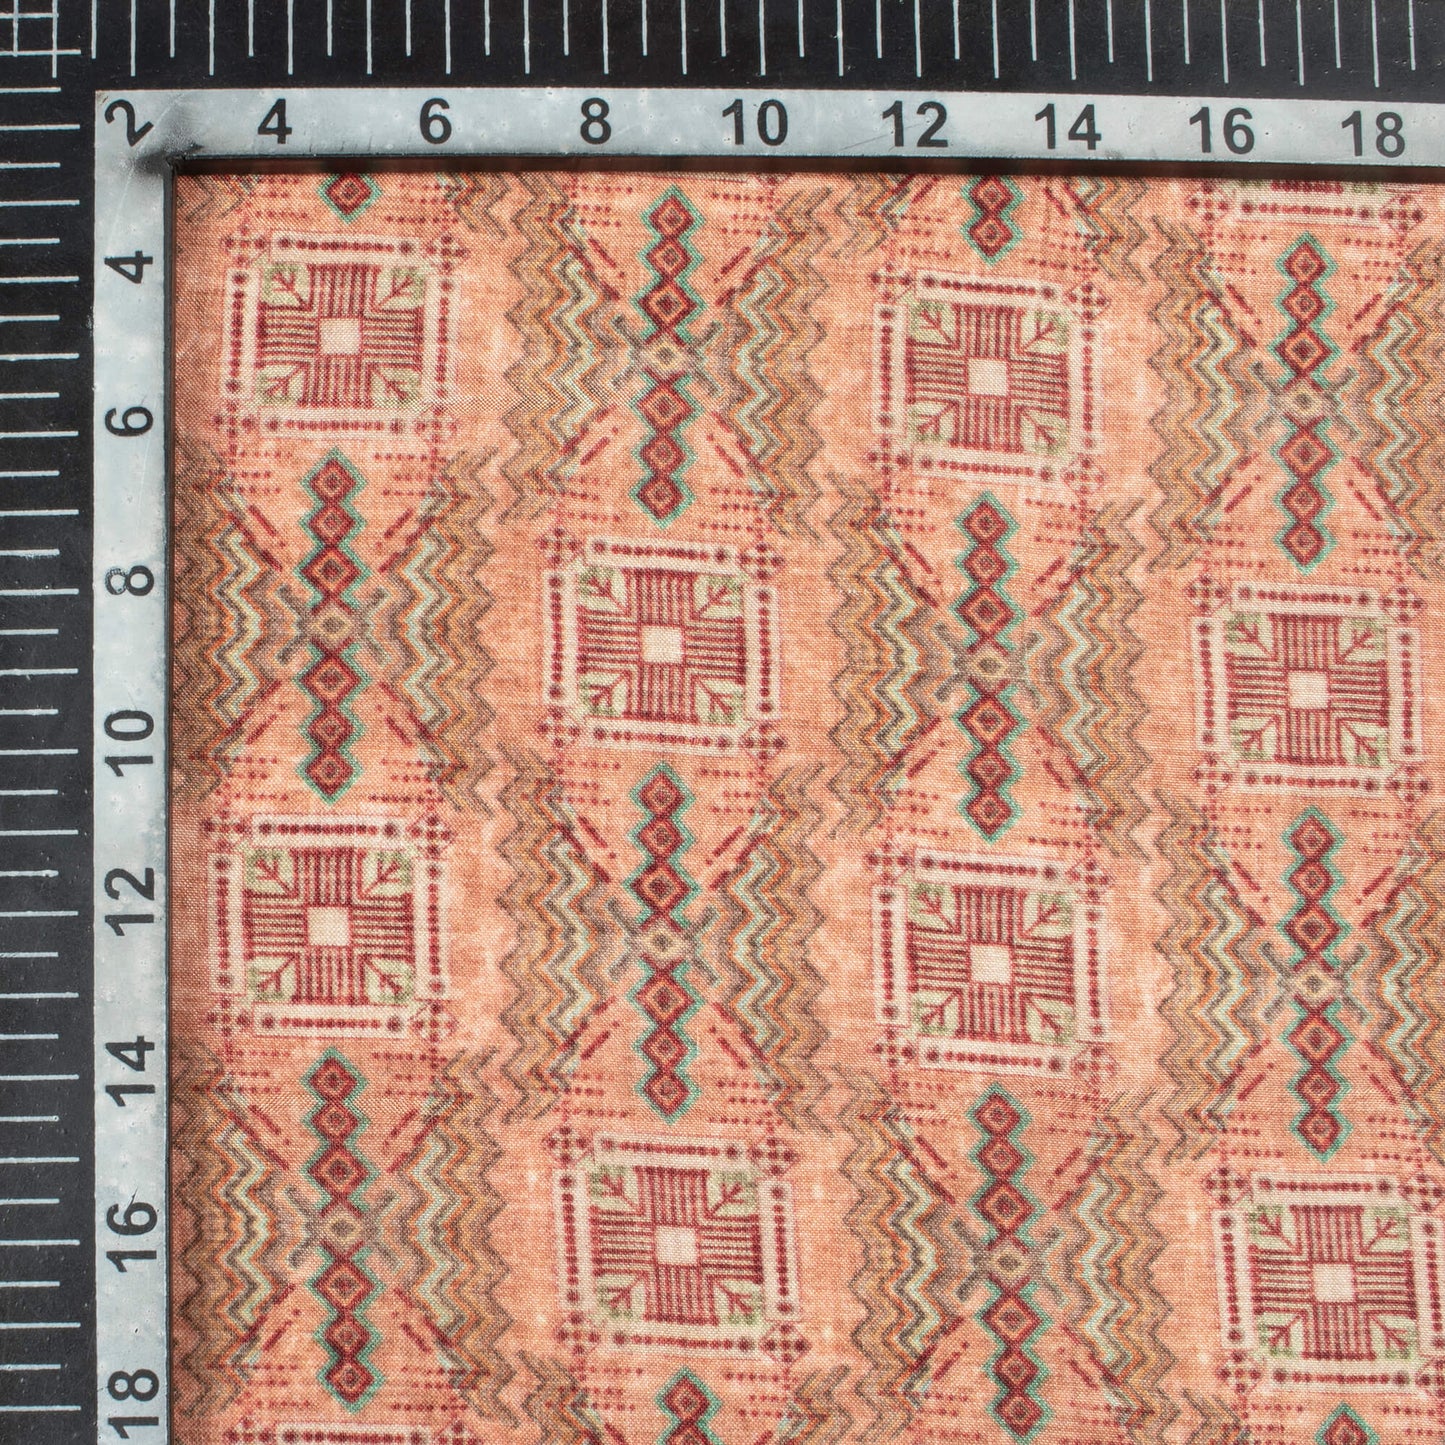 Coral Peach And Maroon Traditional Pattern Digital Print Viscose Uppada Silk Fabric